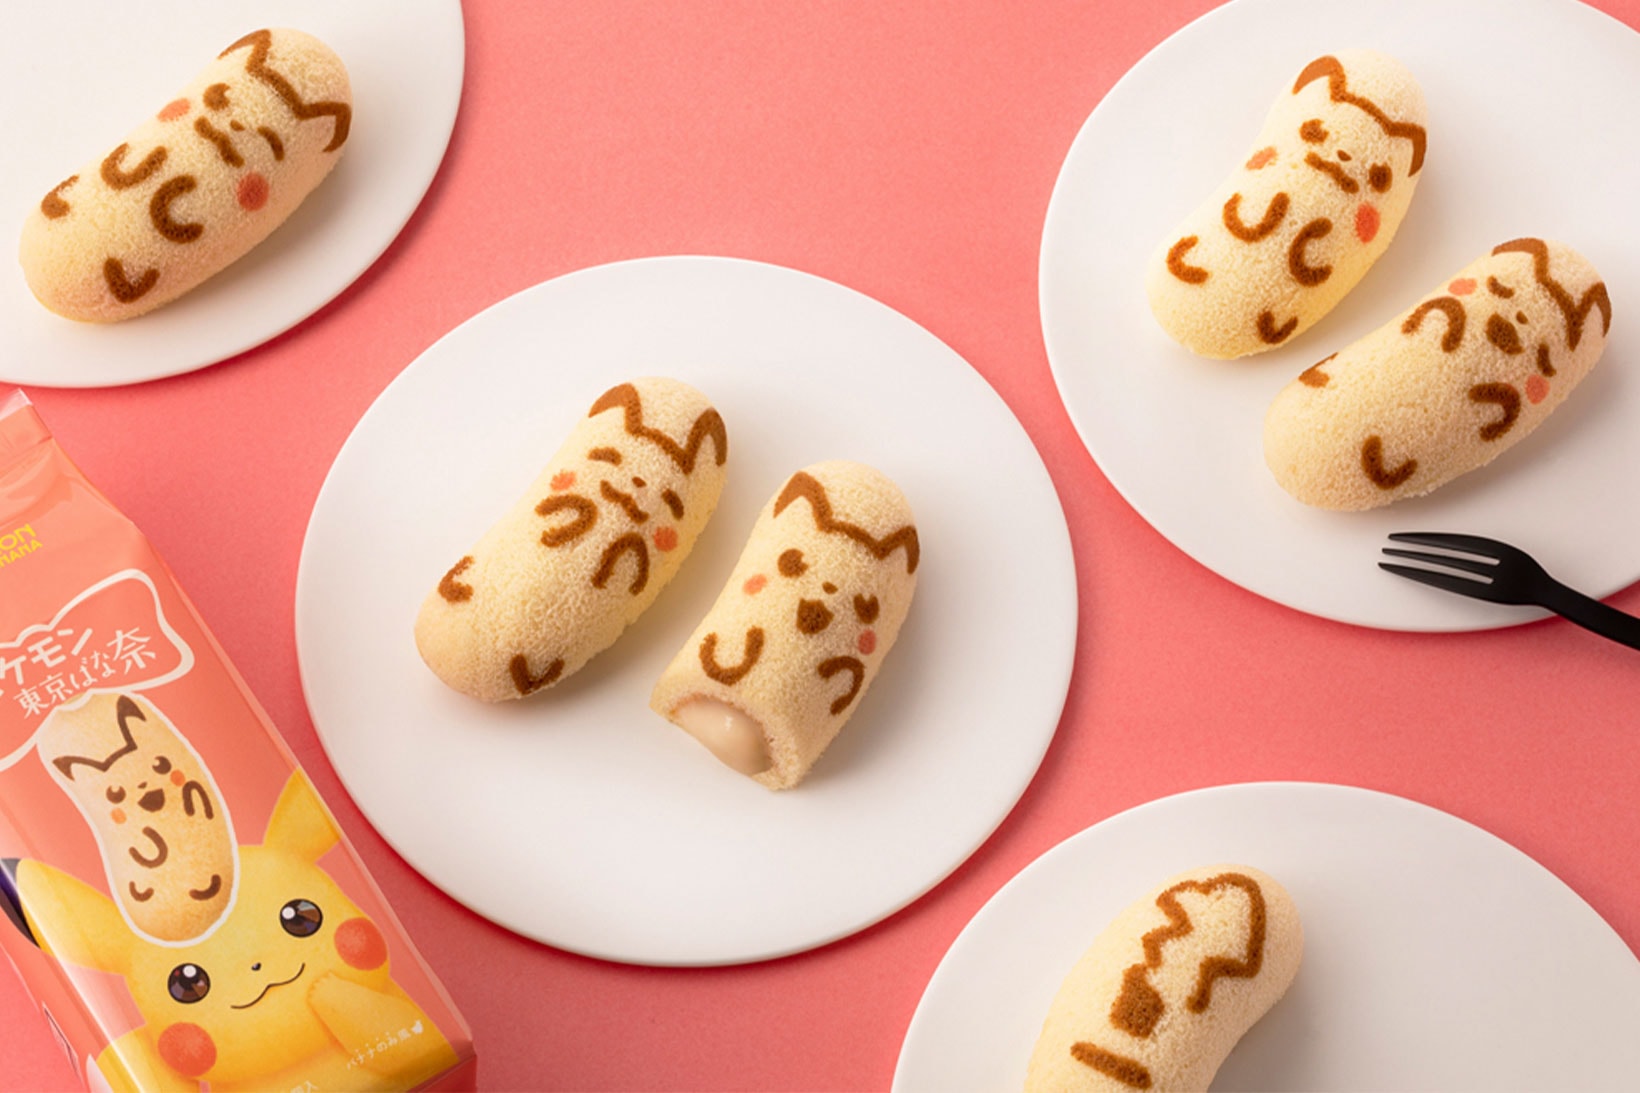 pokemon pikachu tokyo banana japanese snacks desserts collaboration where to buy release